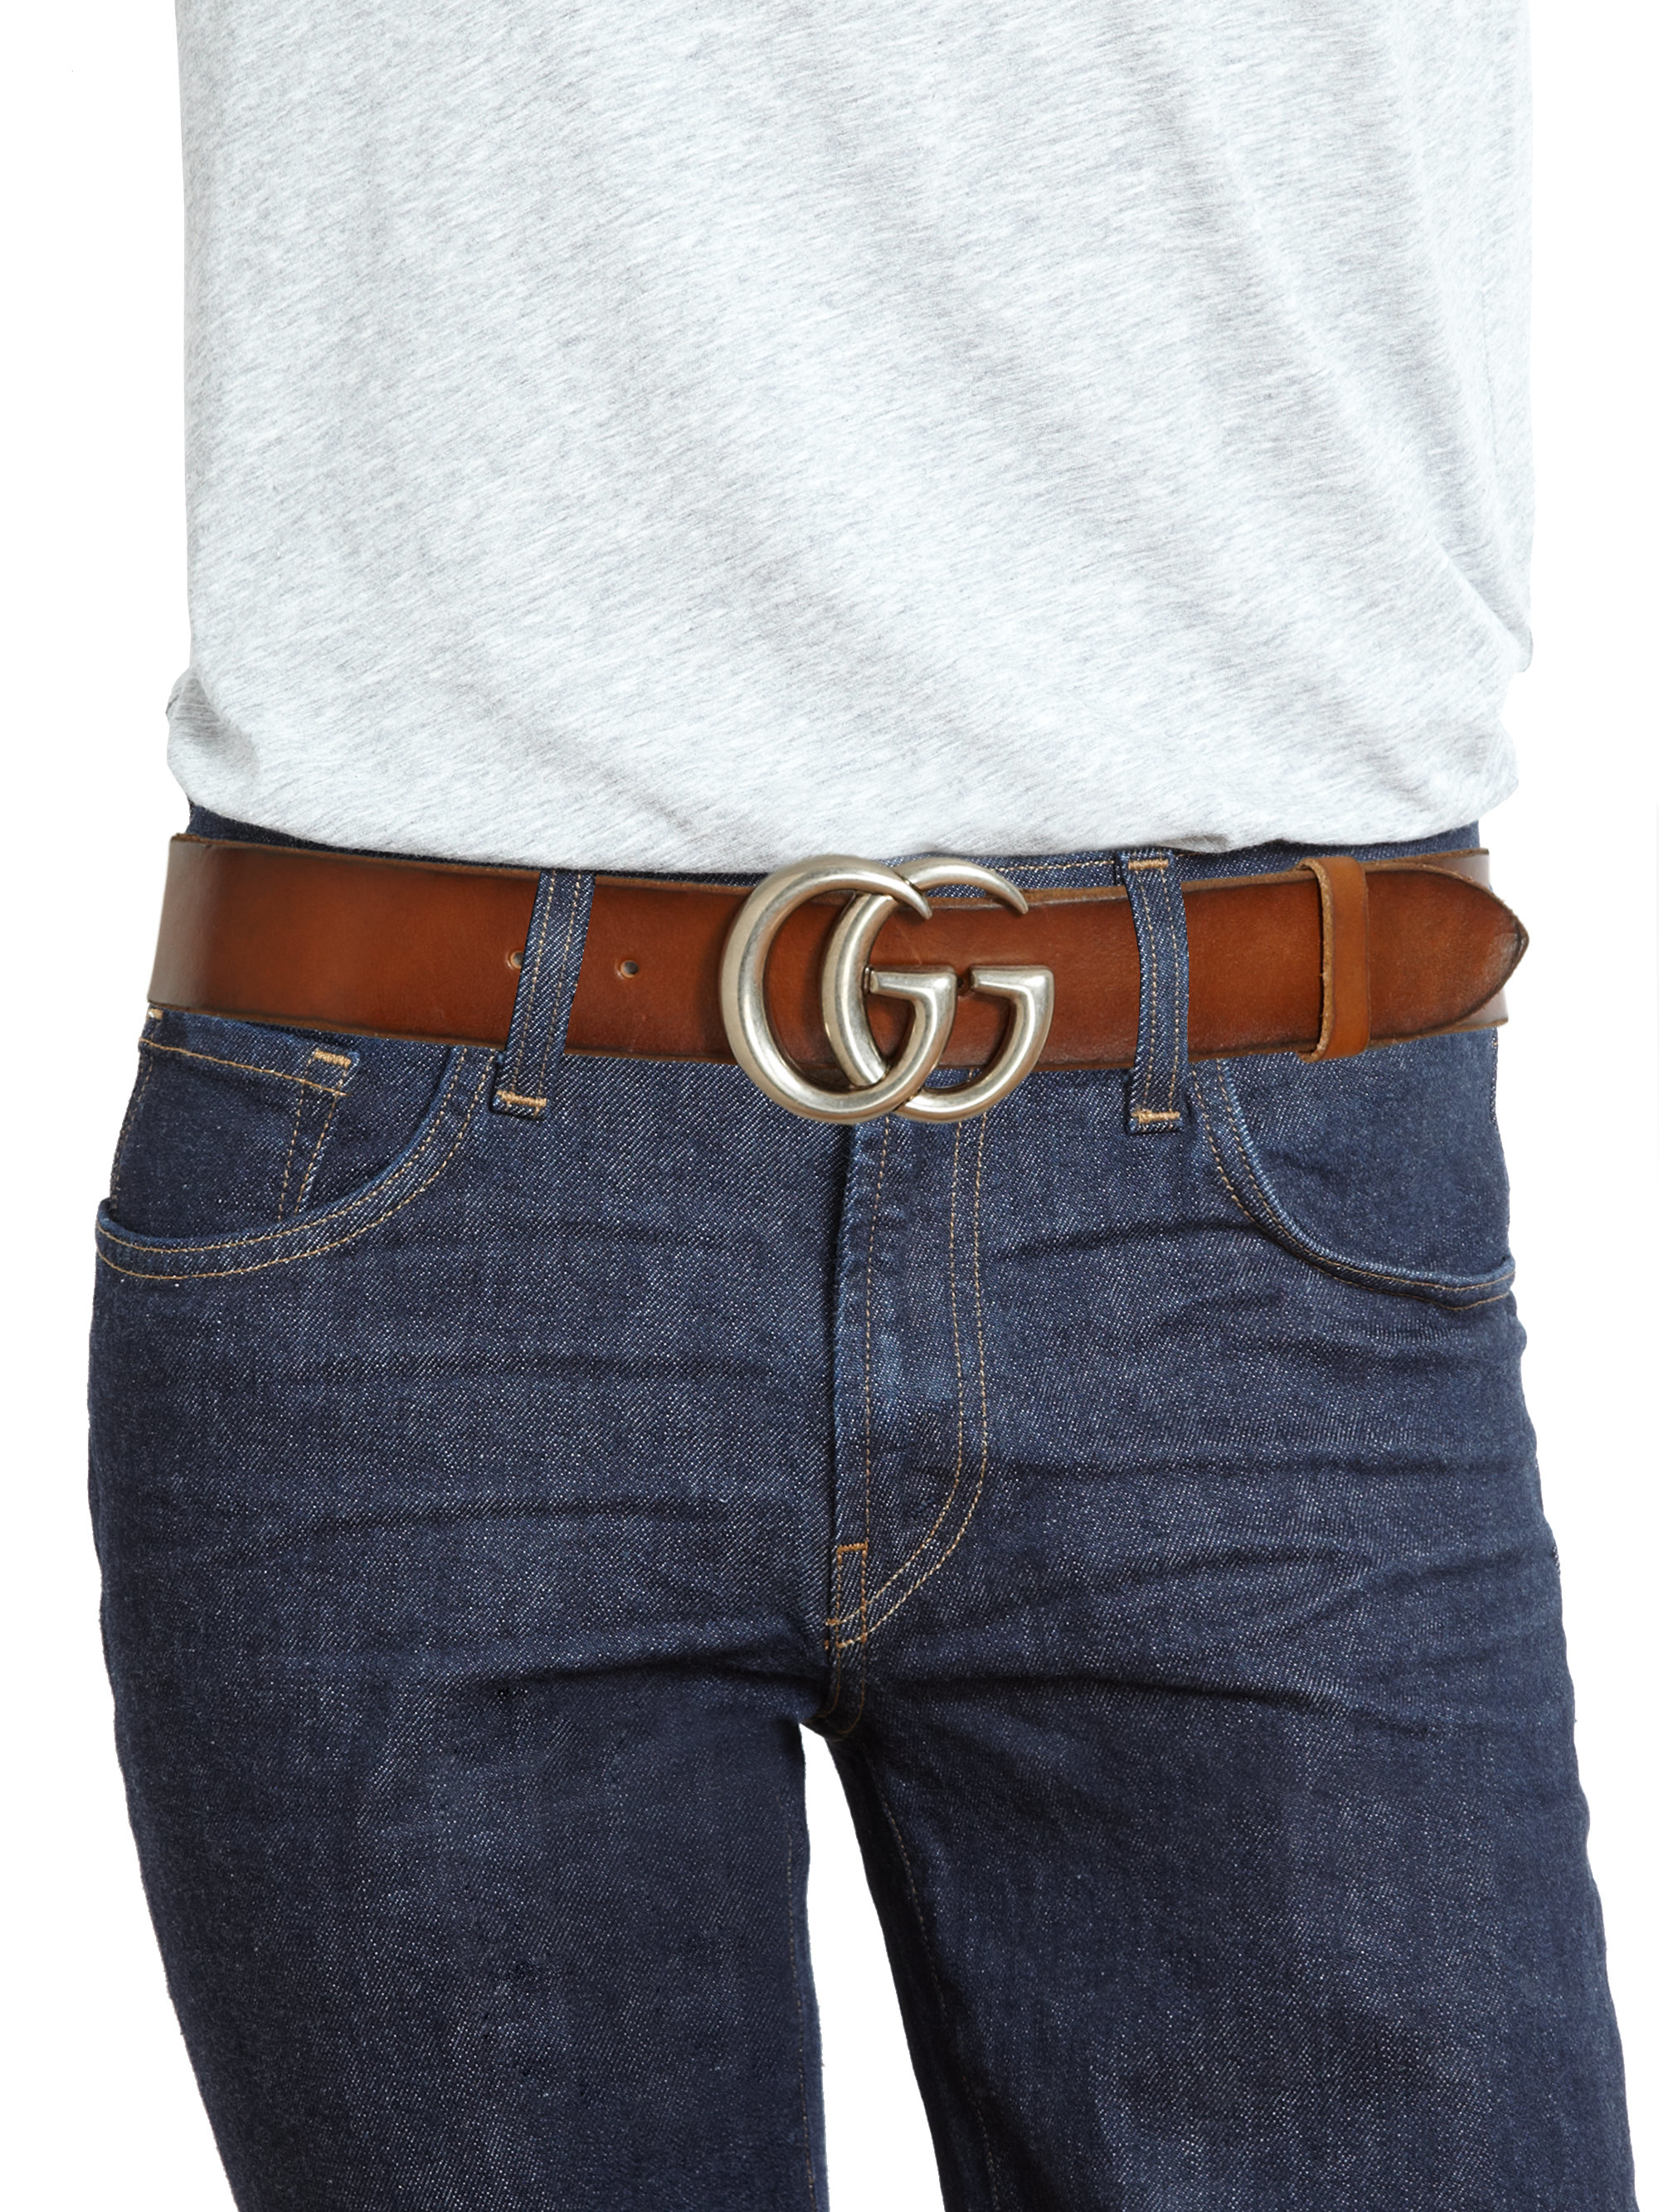 gucci gg belt brown